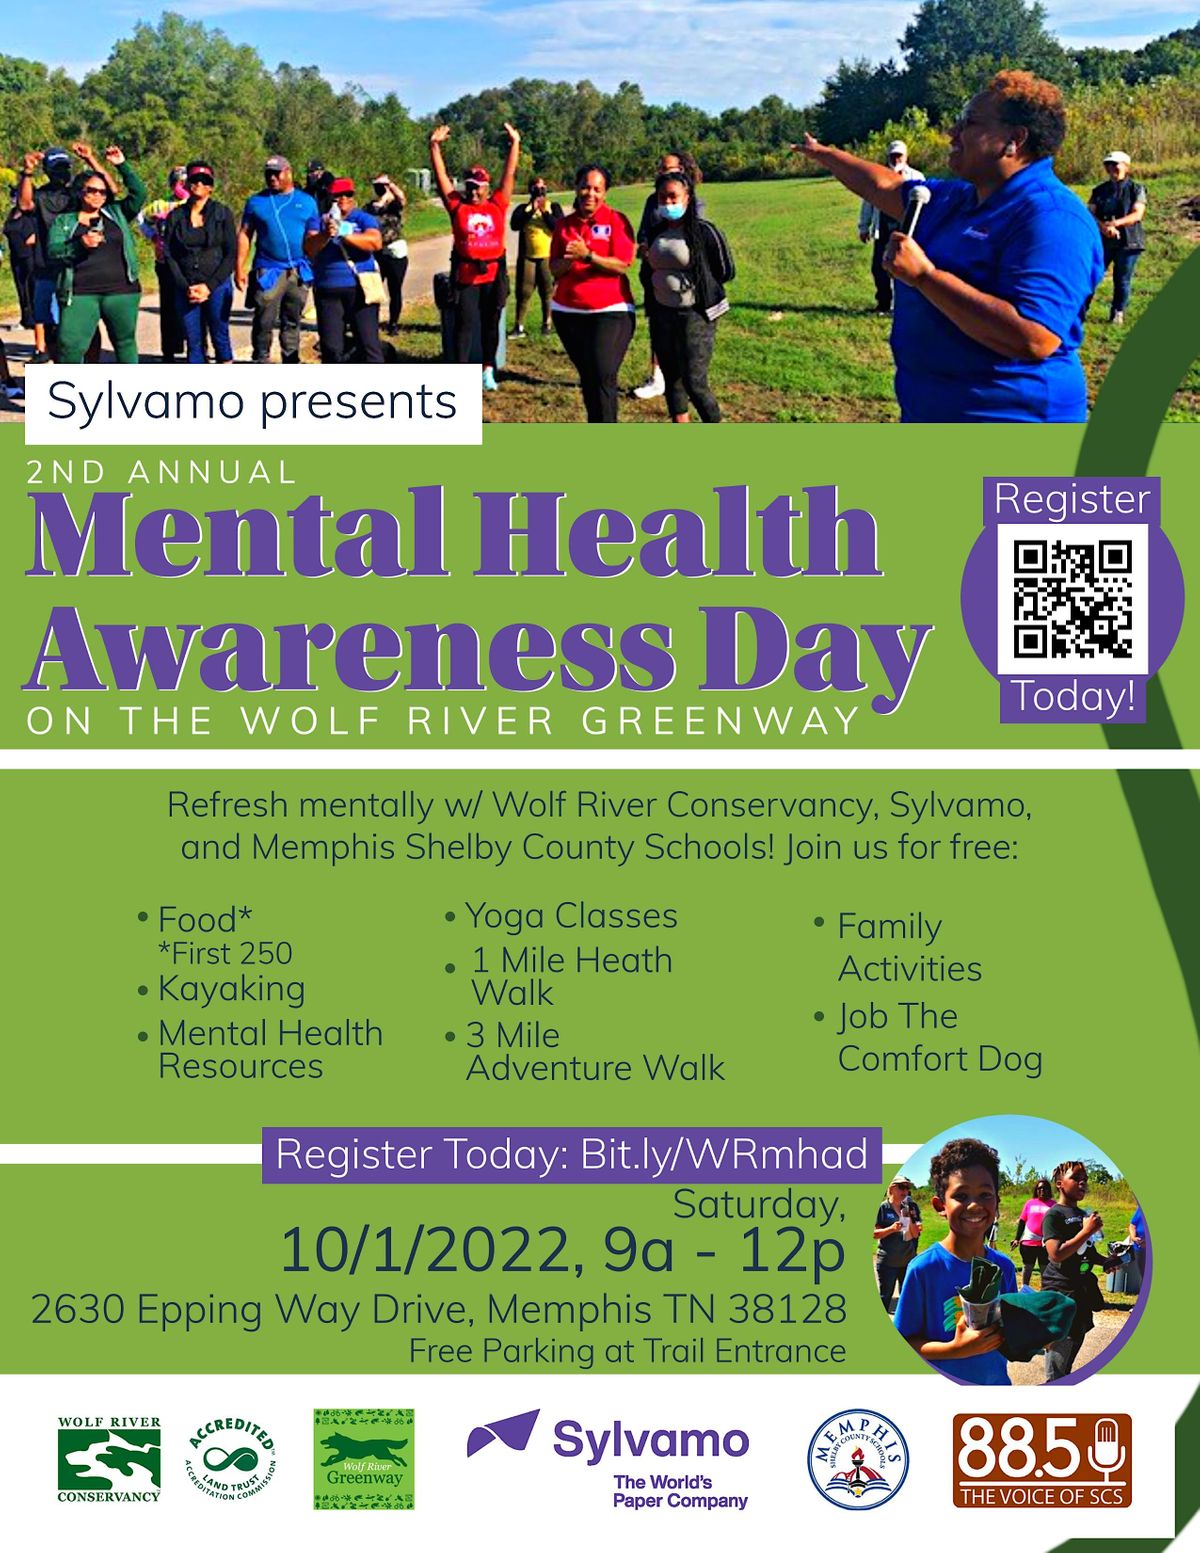 2nd Annual Mental Health Awareness Day at Wolf River Greenway at Epping Way